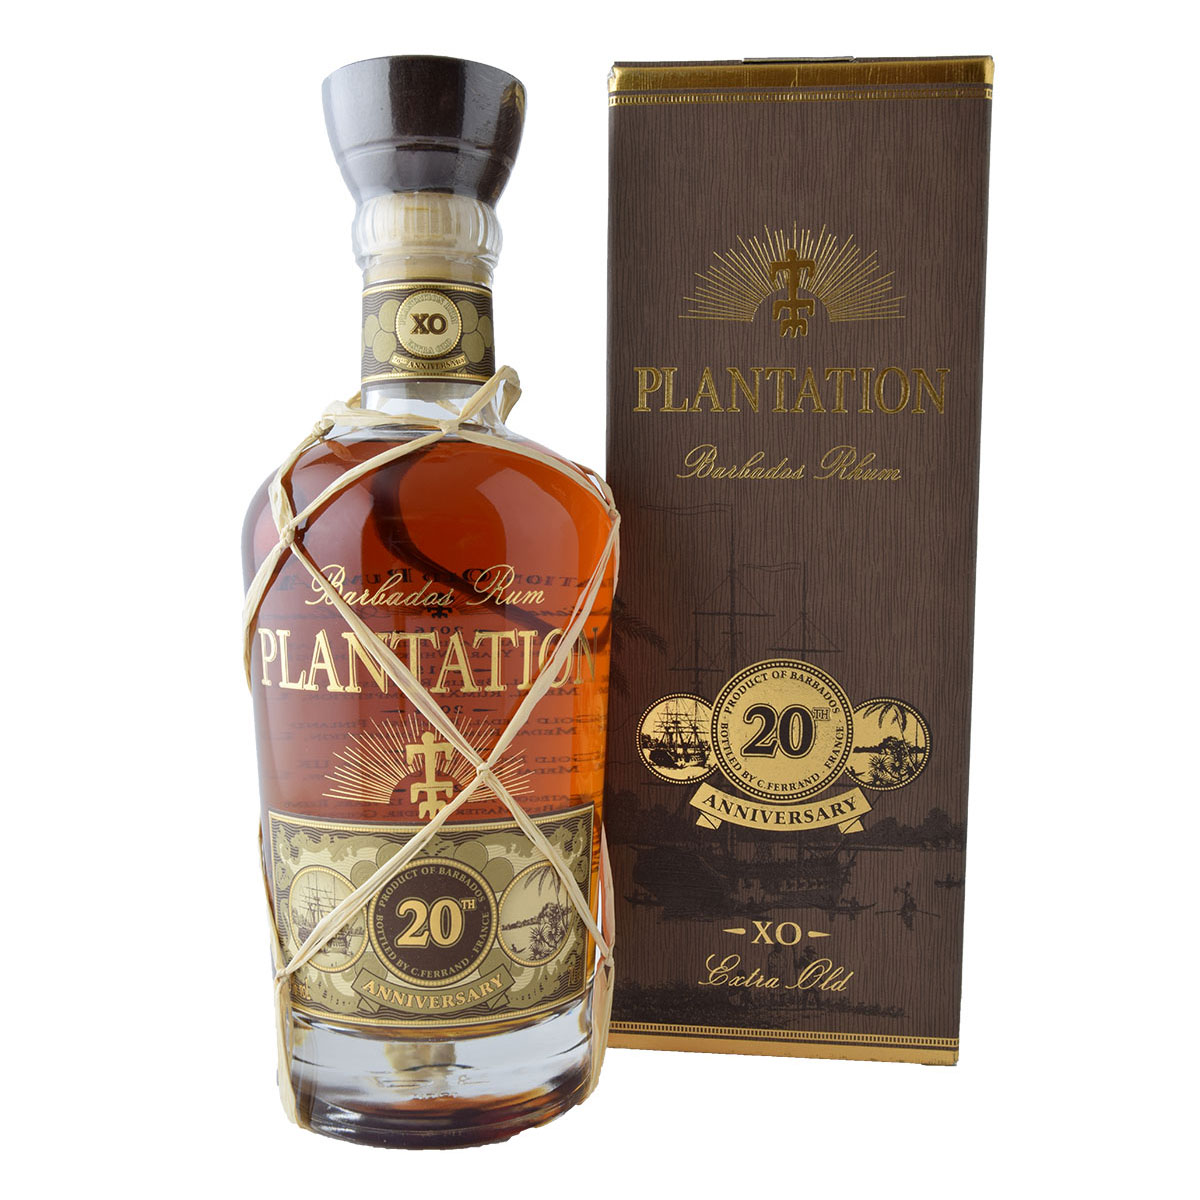 a bottle of plantation rum xo 20th anniversary